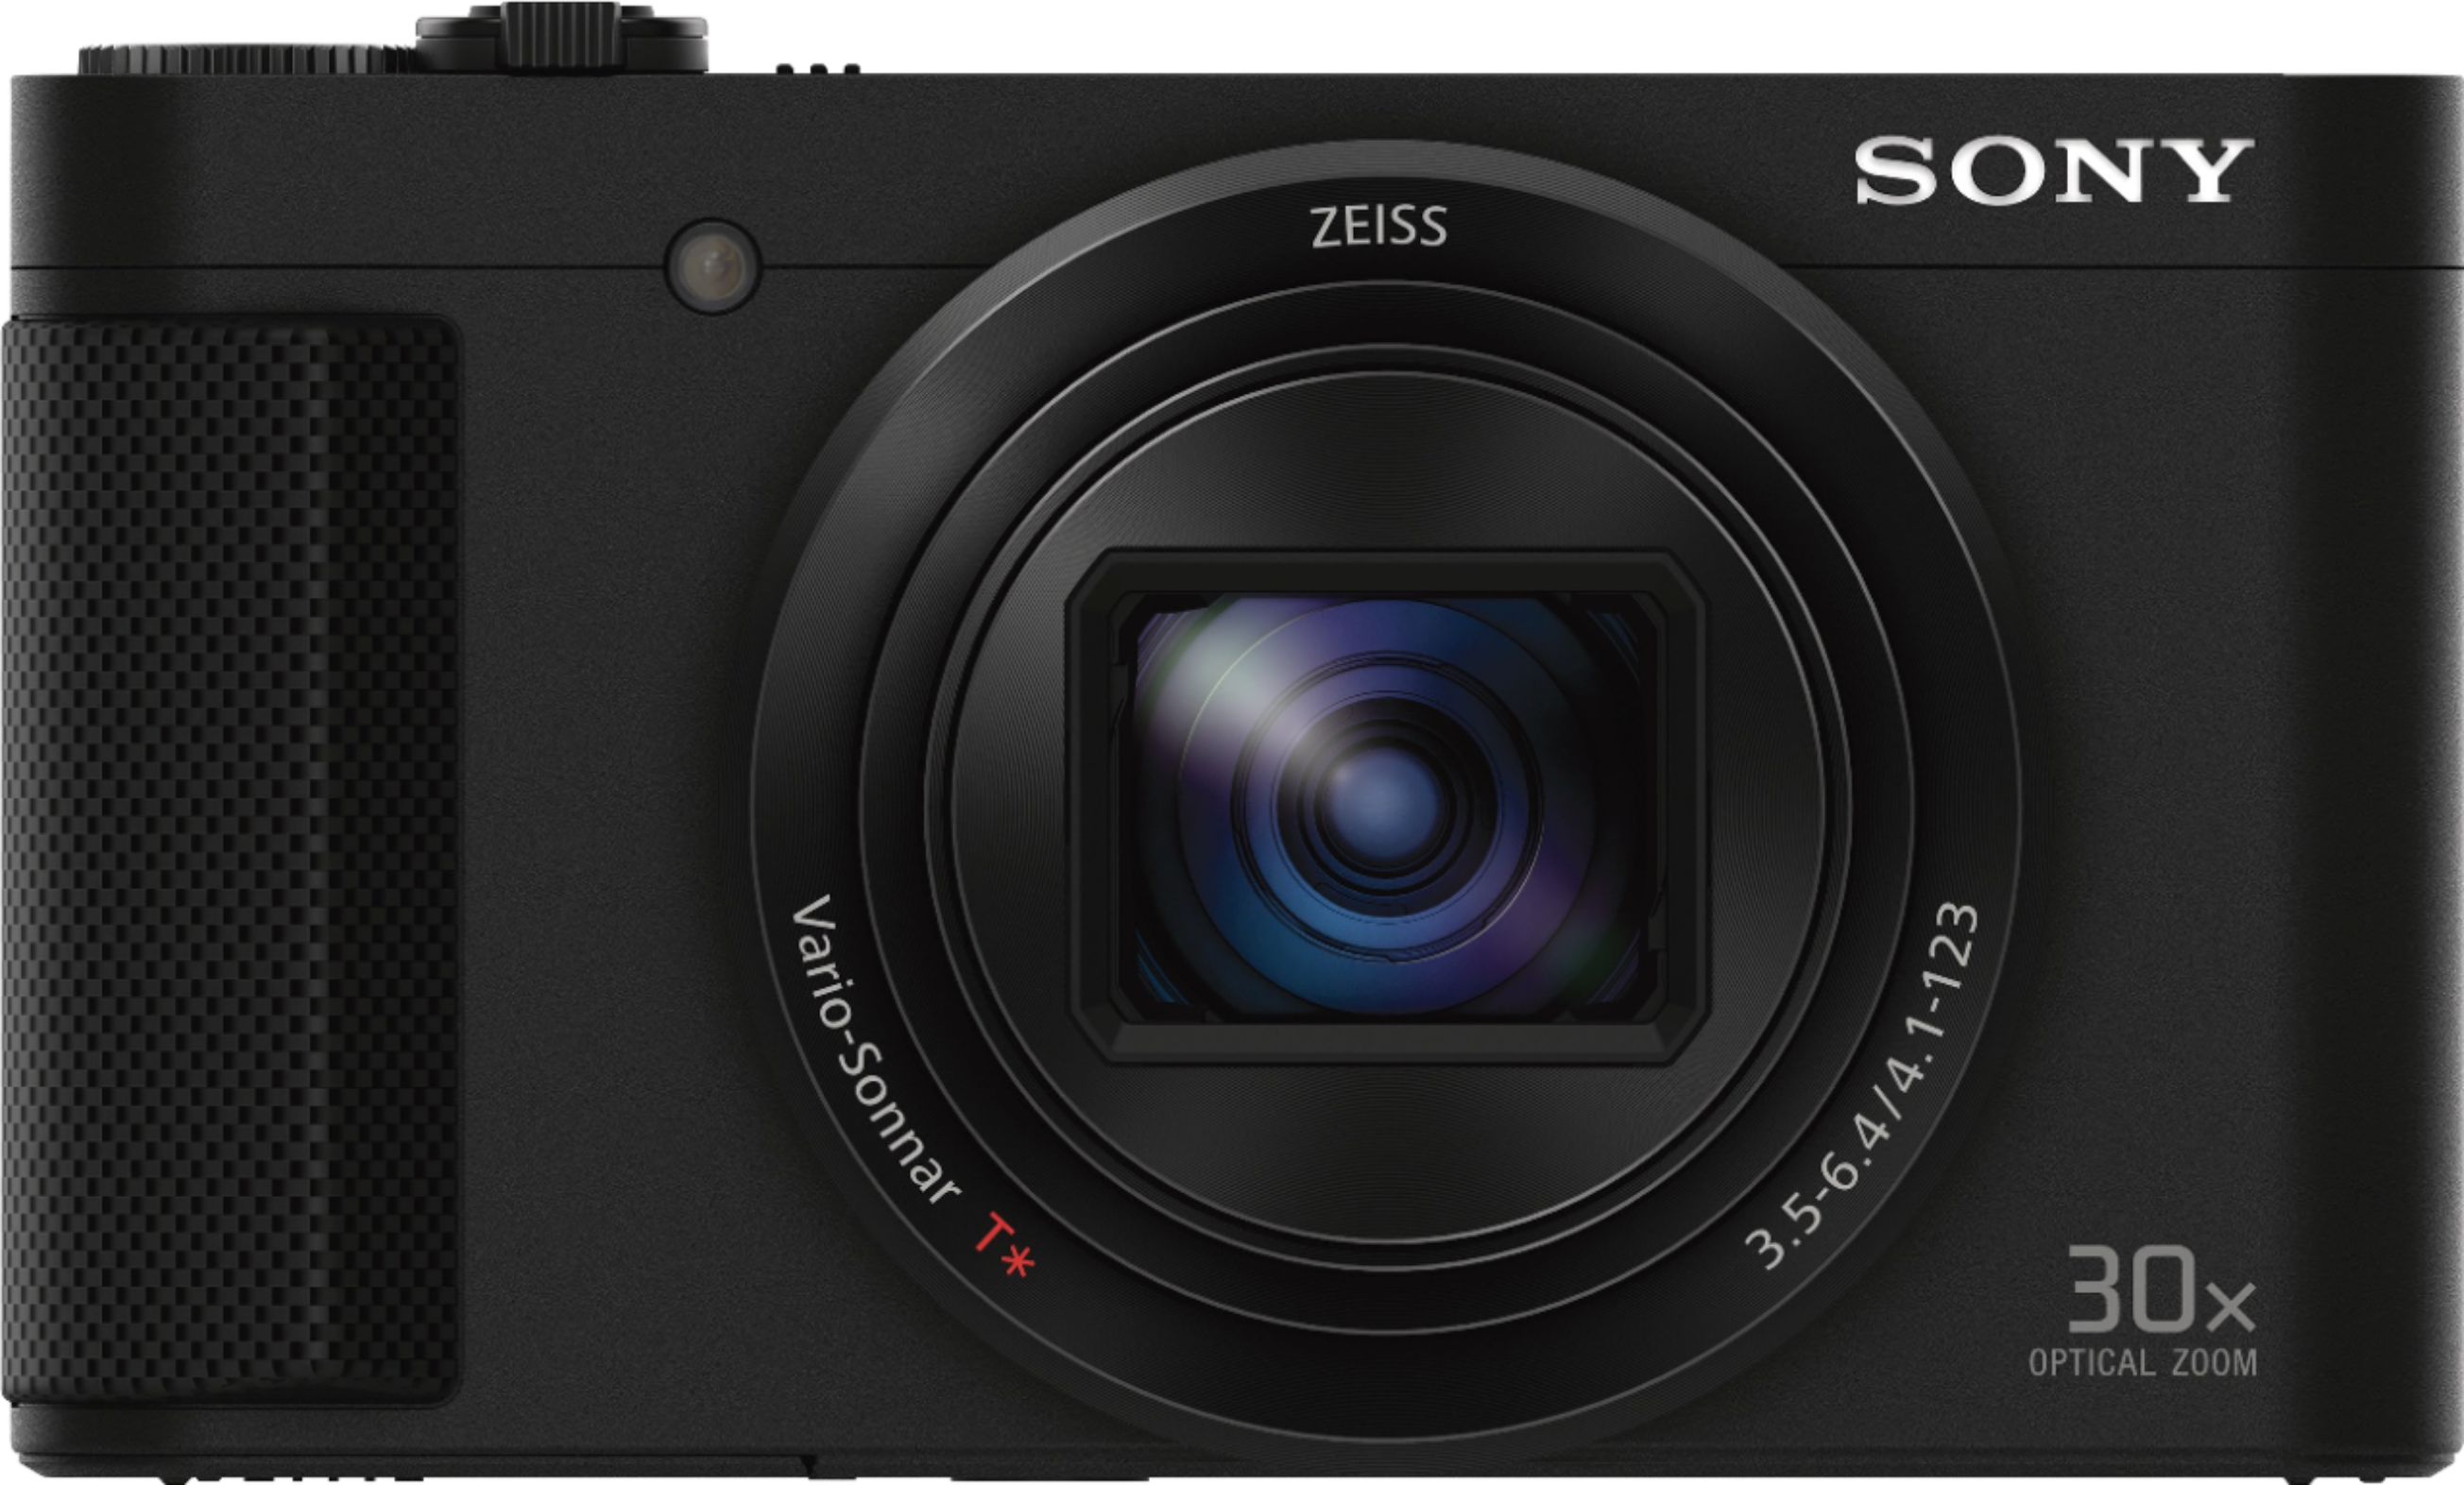 Sony Cyber-shot DSC-HX80 18.2-Megapixel Digital Camera Black DSC-HX80/B